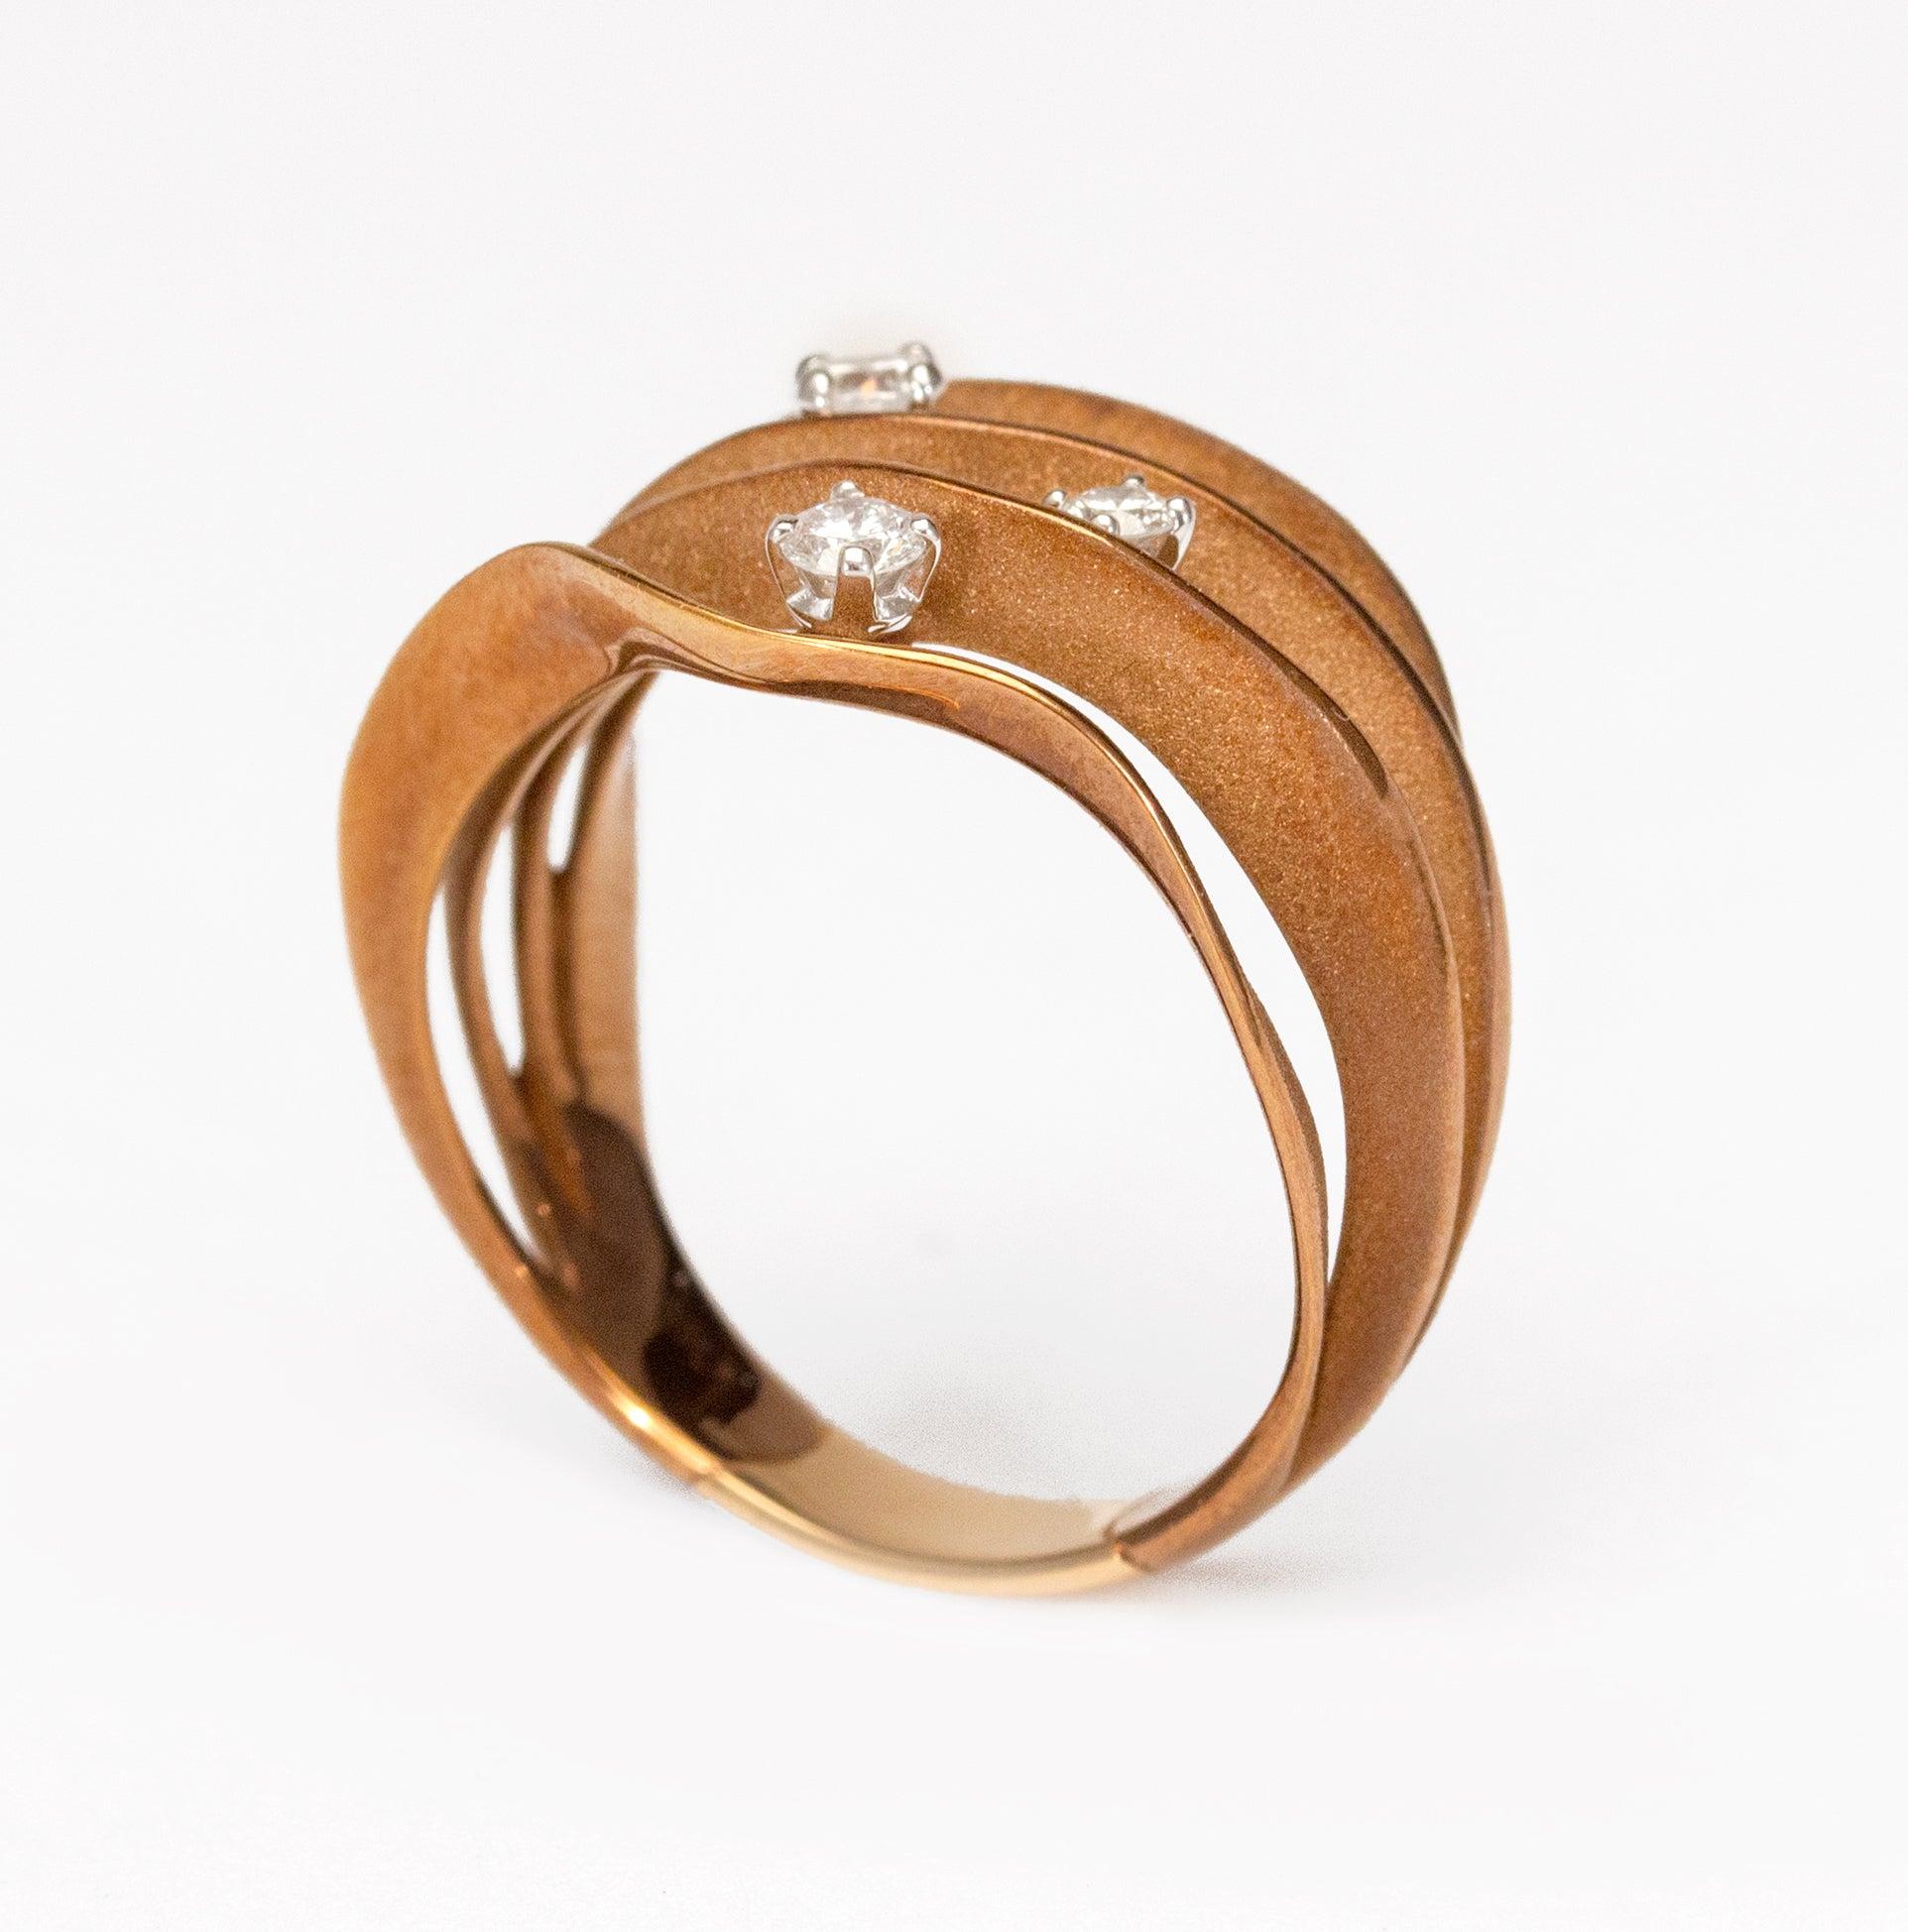 Im Angebot: Annamaria Cammilli „Dune Royal“ Ring mit Diamanten aus 18 Karat braunem Schokoladengold () 5